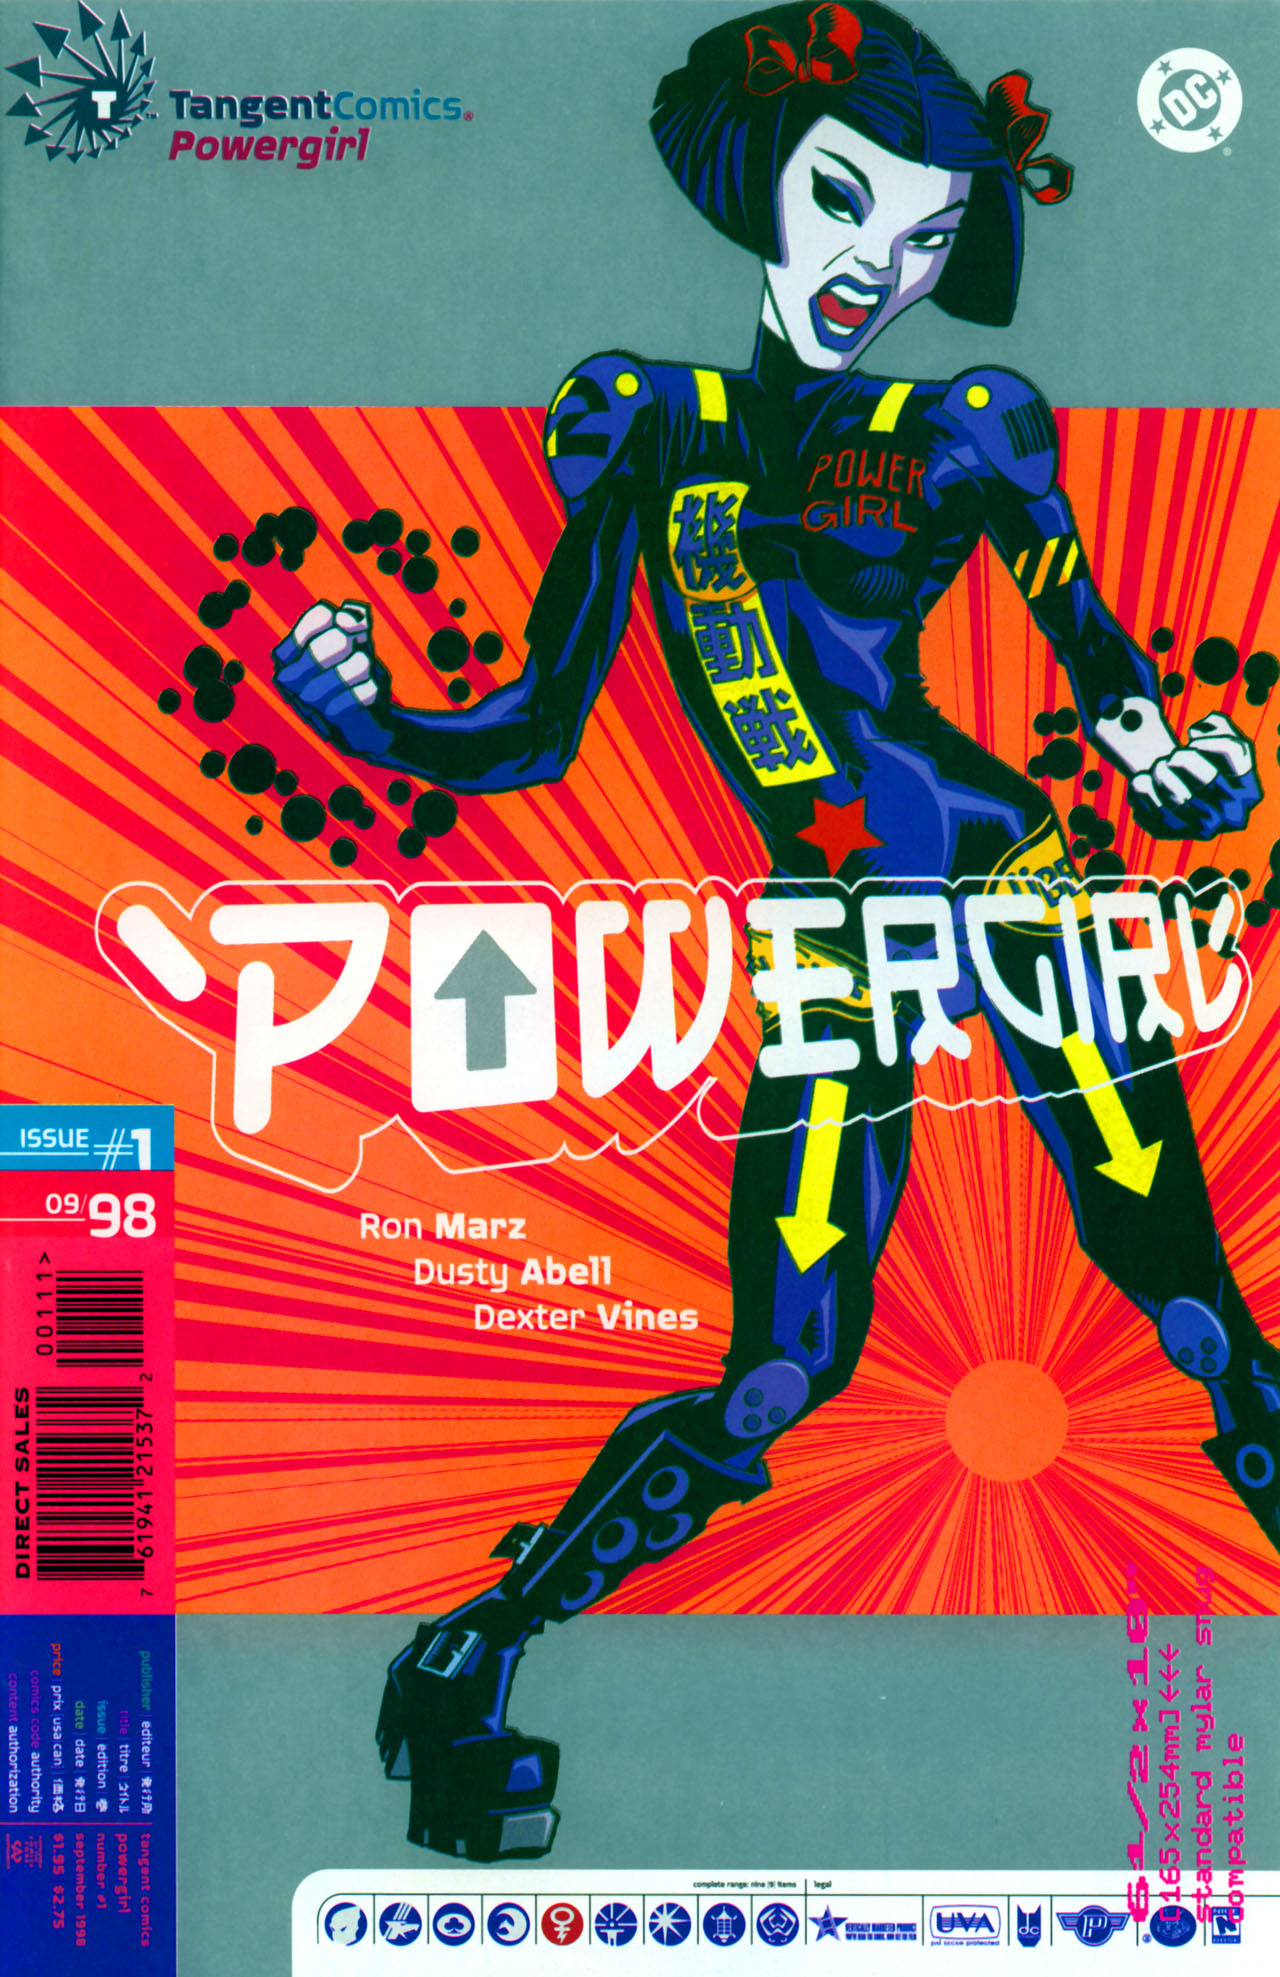 Tangent Comics/ Powergirl Full Page 1